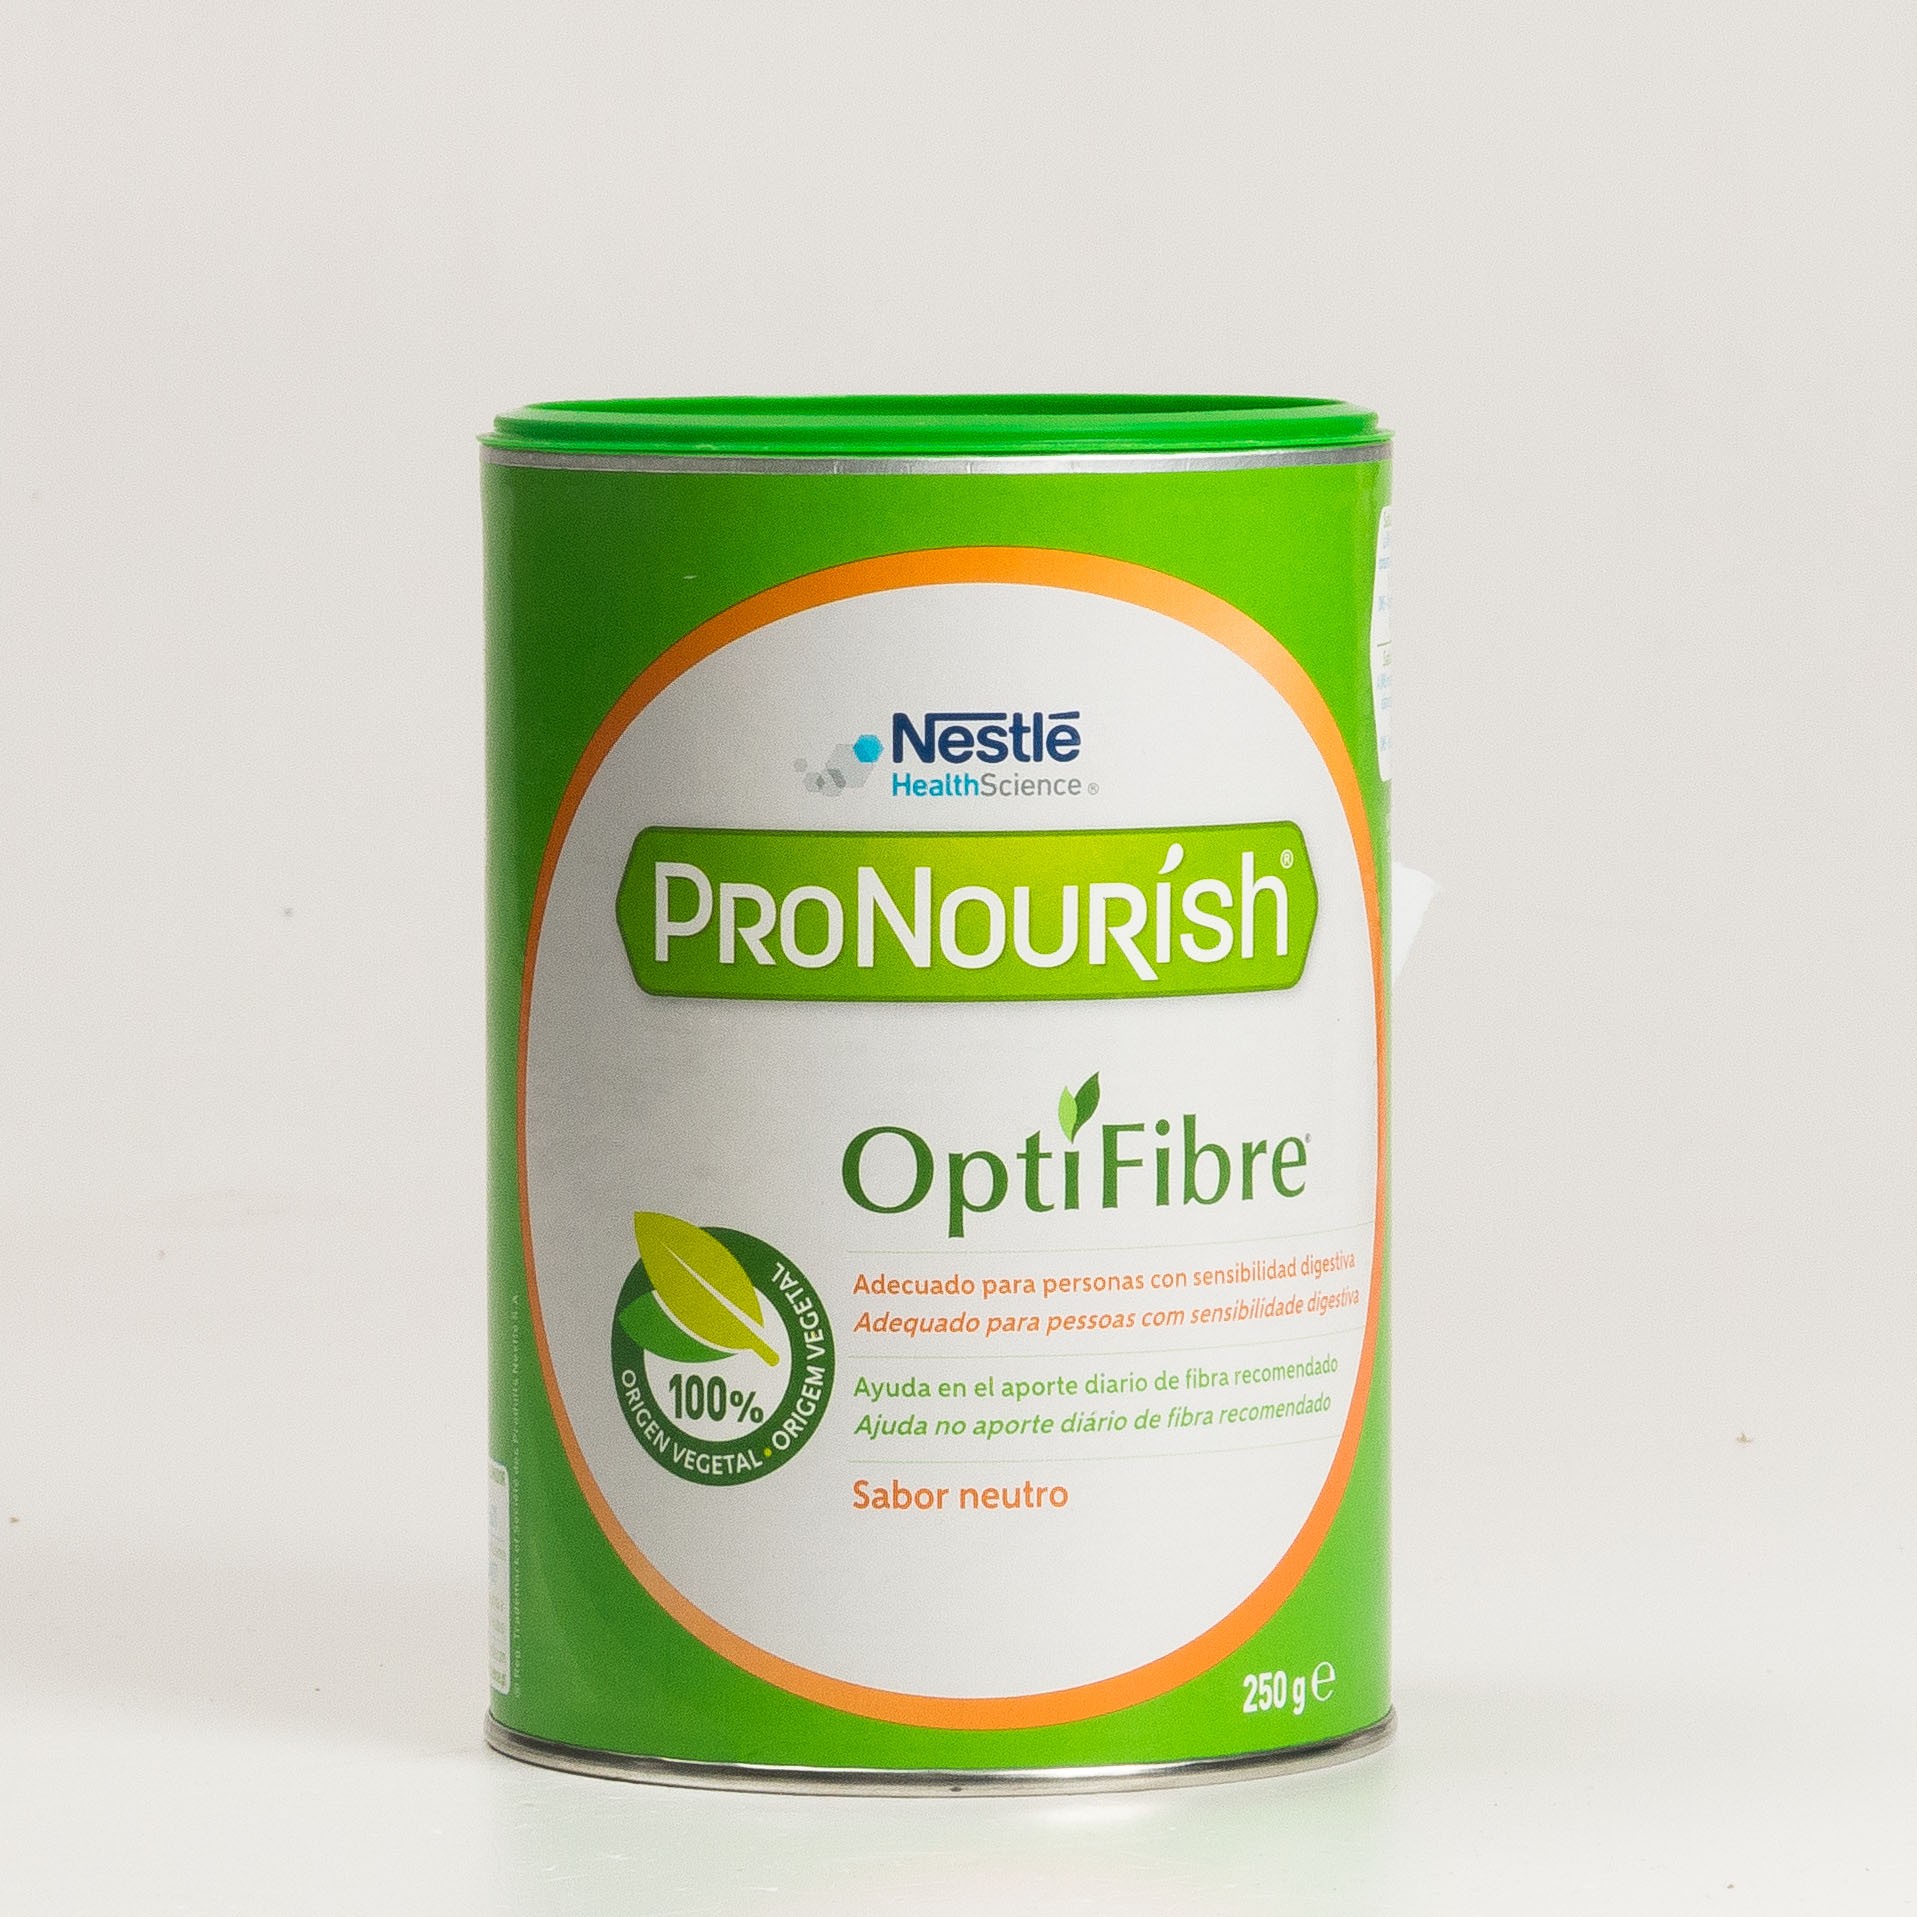 Nestle ProNourish Optifibre, 250g.